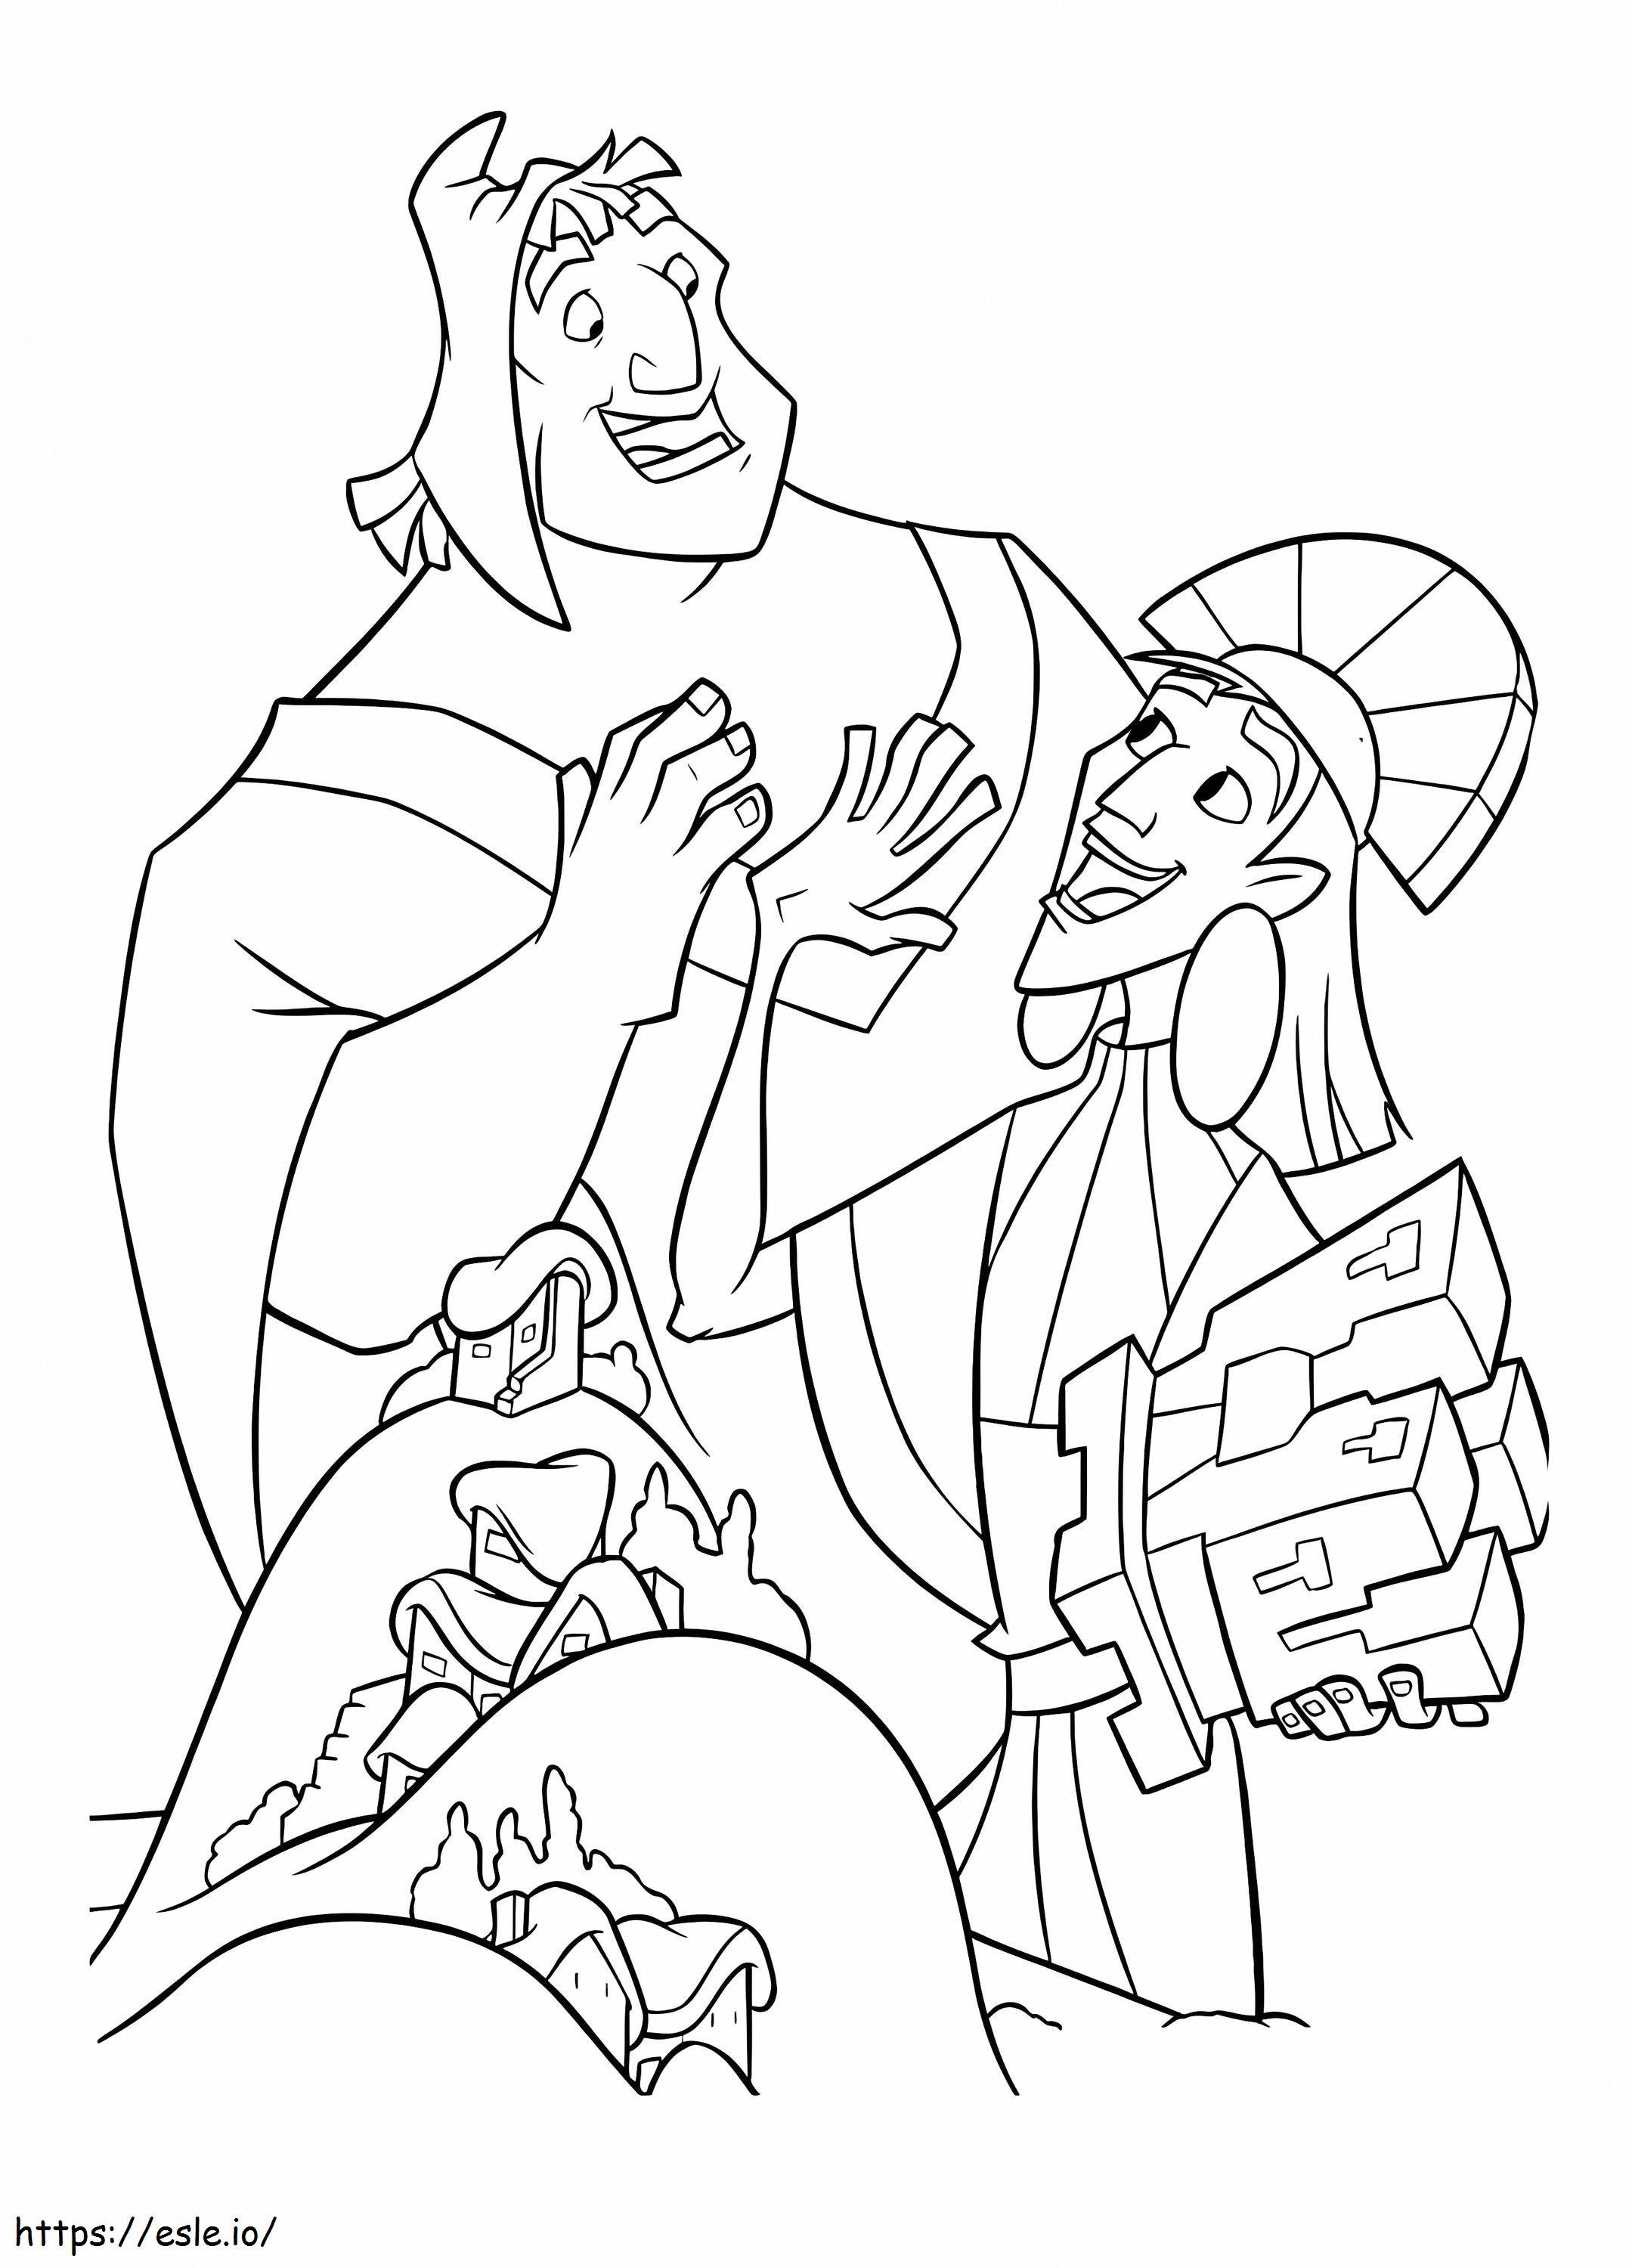 Pacha And Kuzco coloring page